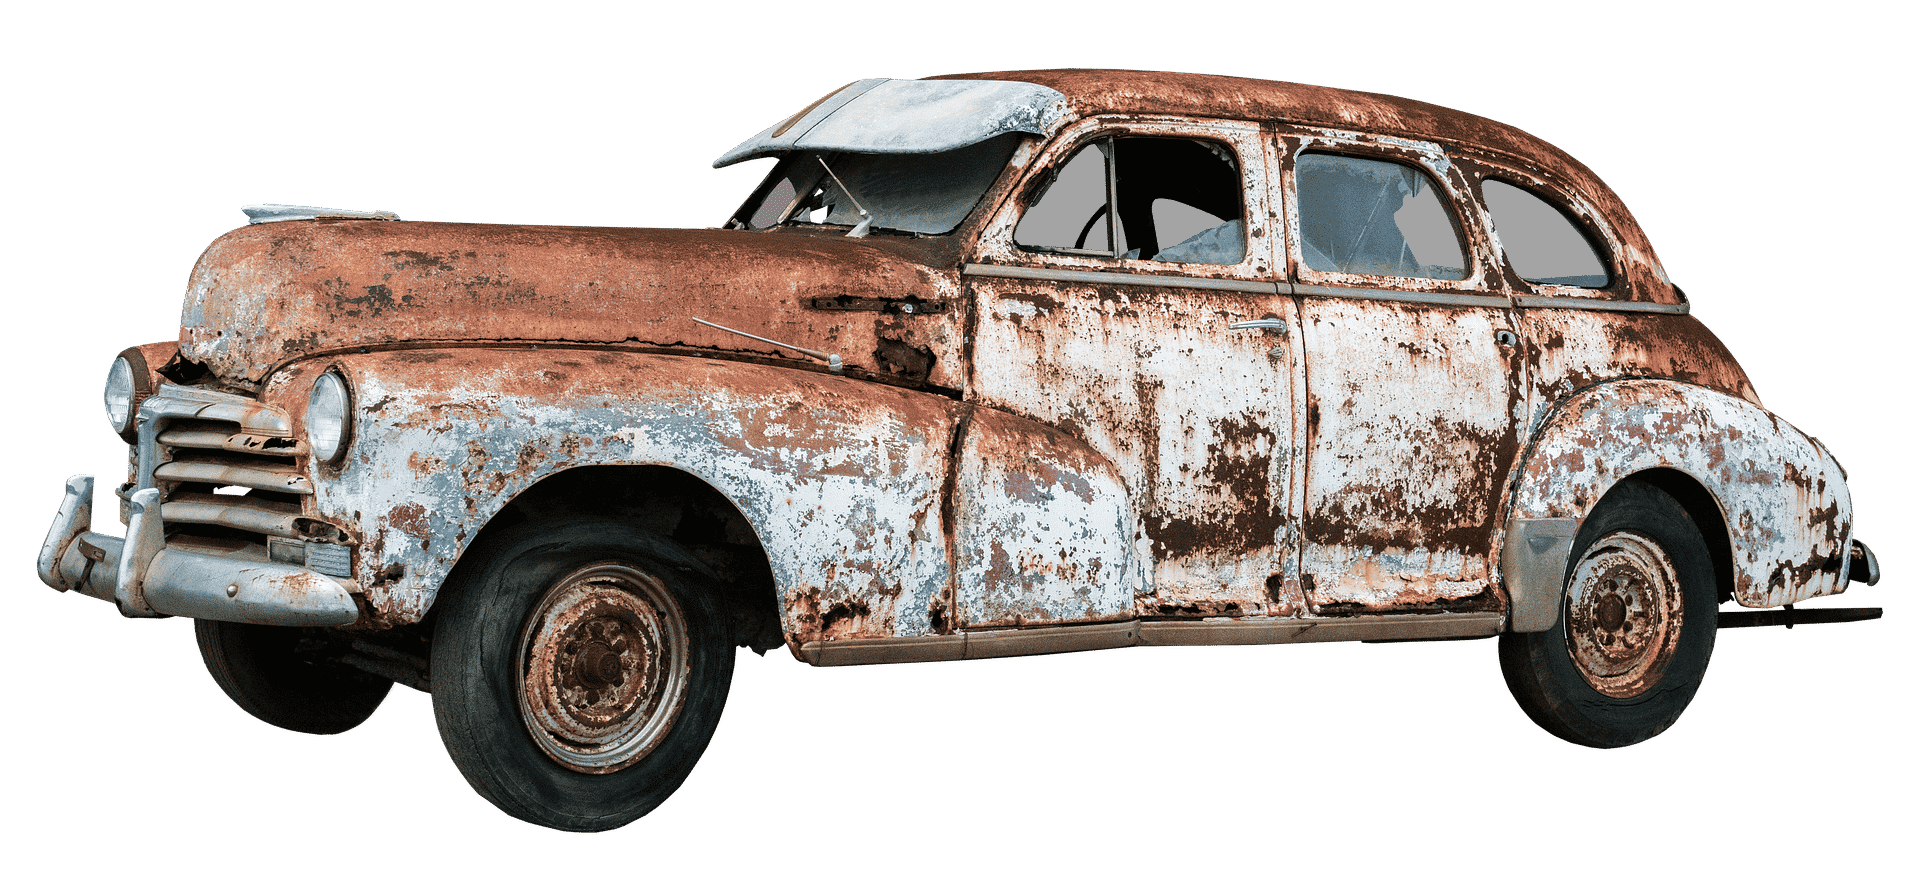 Rust on the car фото 73